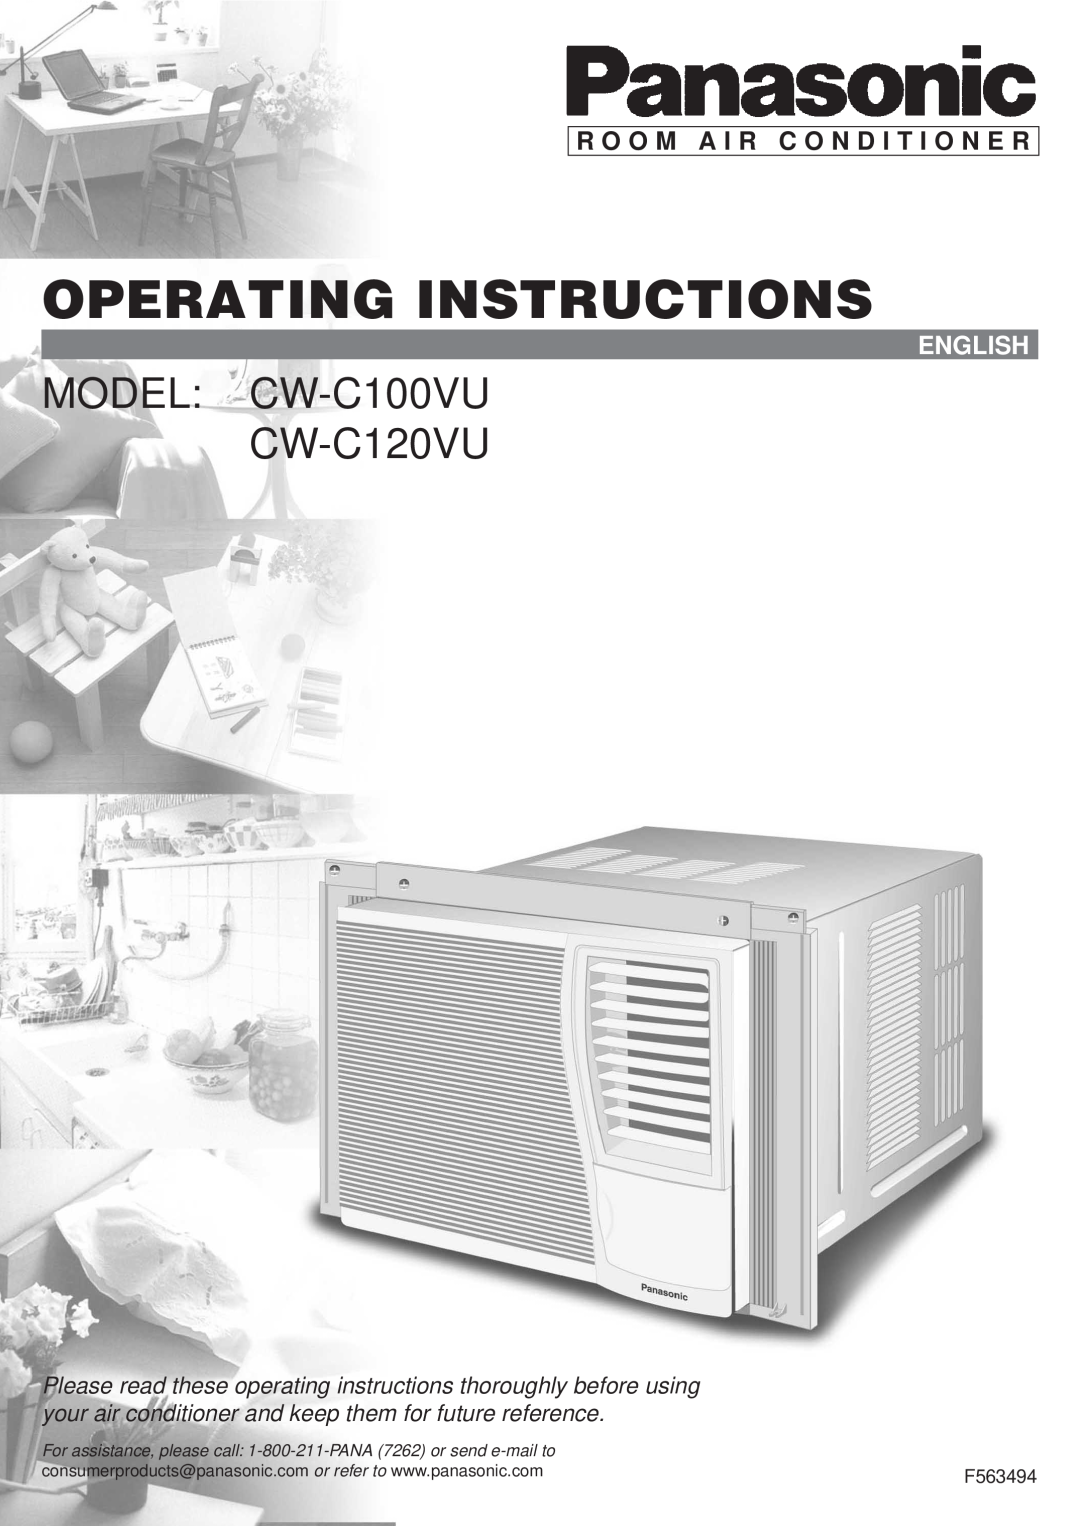 Panasonic manual Operating Instructions, MODEL CW-C100VU CW-C120VU, R O O M A I R C O N D I T I O N E R, English 